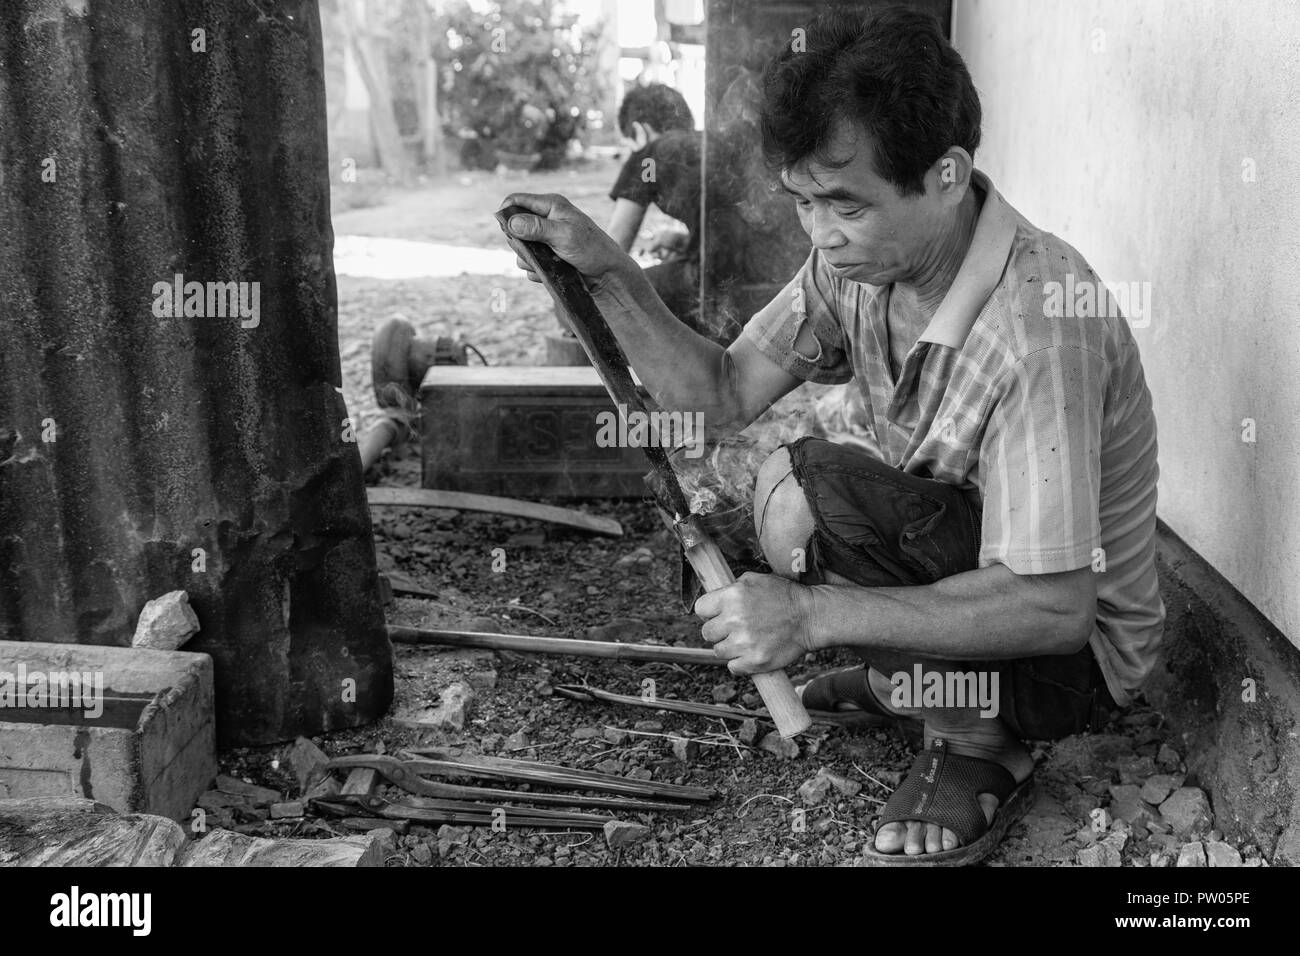 LUANG PRABANG, LAOS - OCTOBER 8: An unidentified man burns a knife into a handle at a local village forge in Luang Prabang, Laos on October 8, 2017. Stock Photo